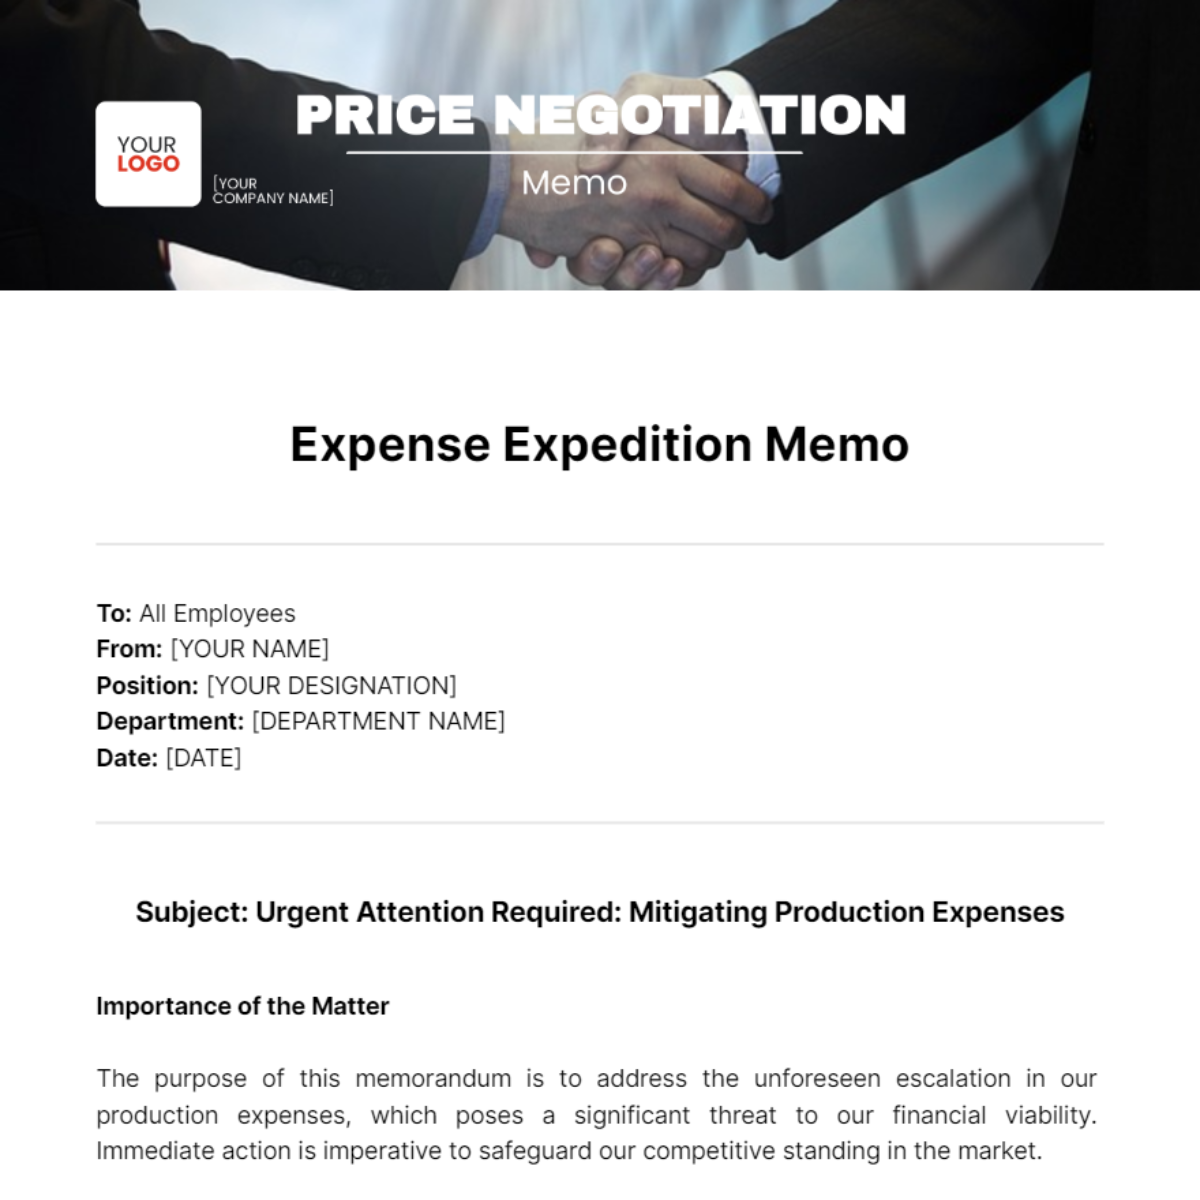 Price Negotiation Memo Template